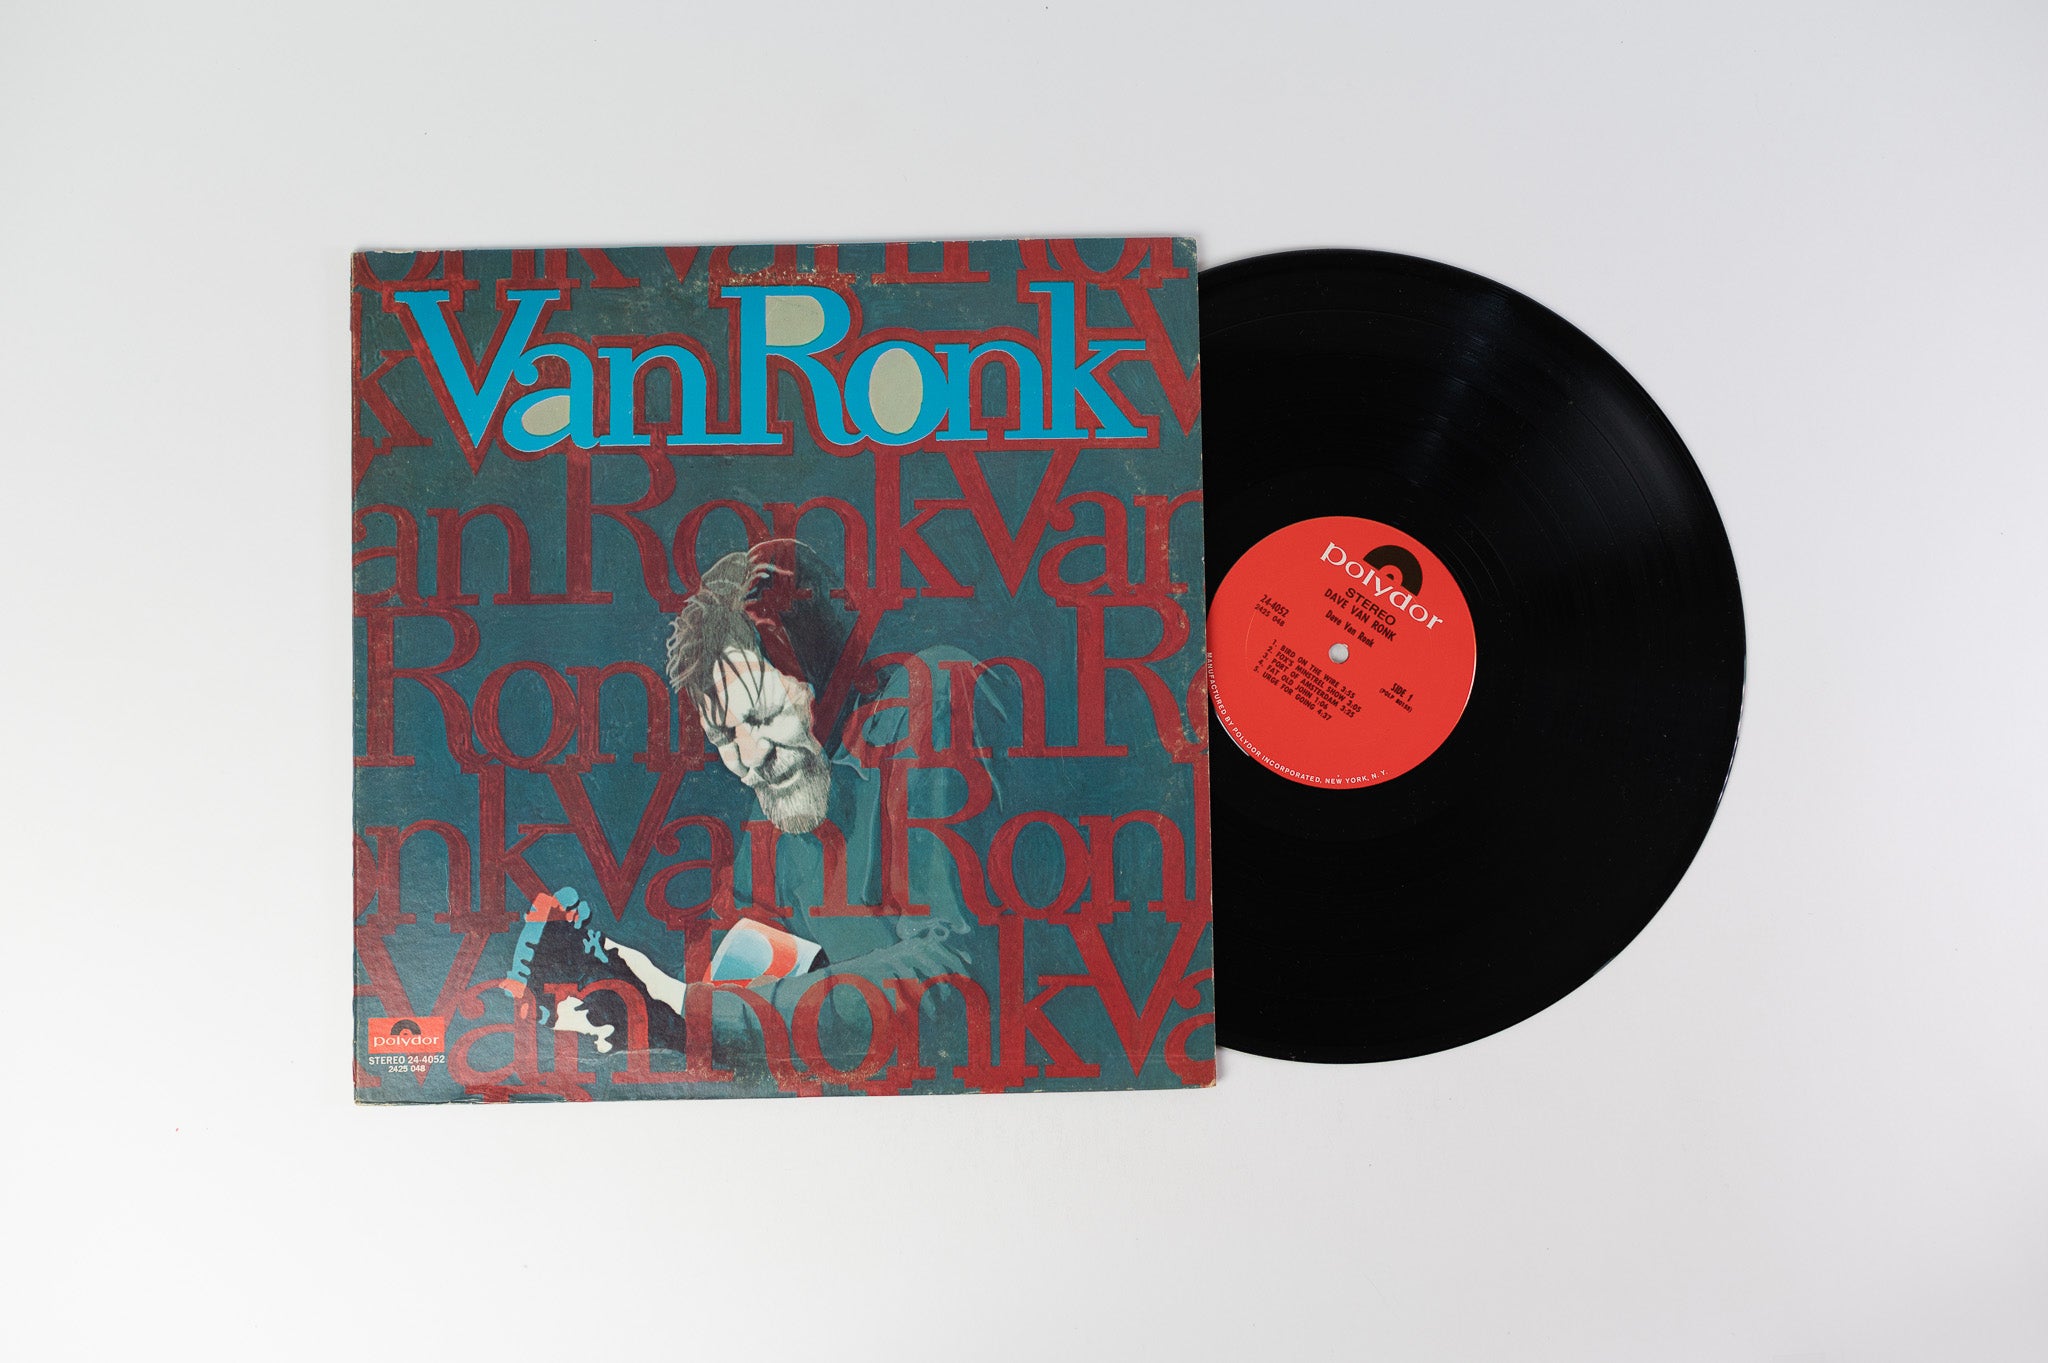 Dave Van Ronk - Van Ronk on Polydor